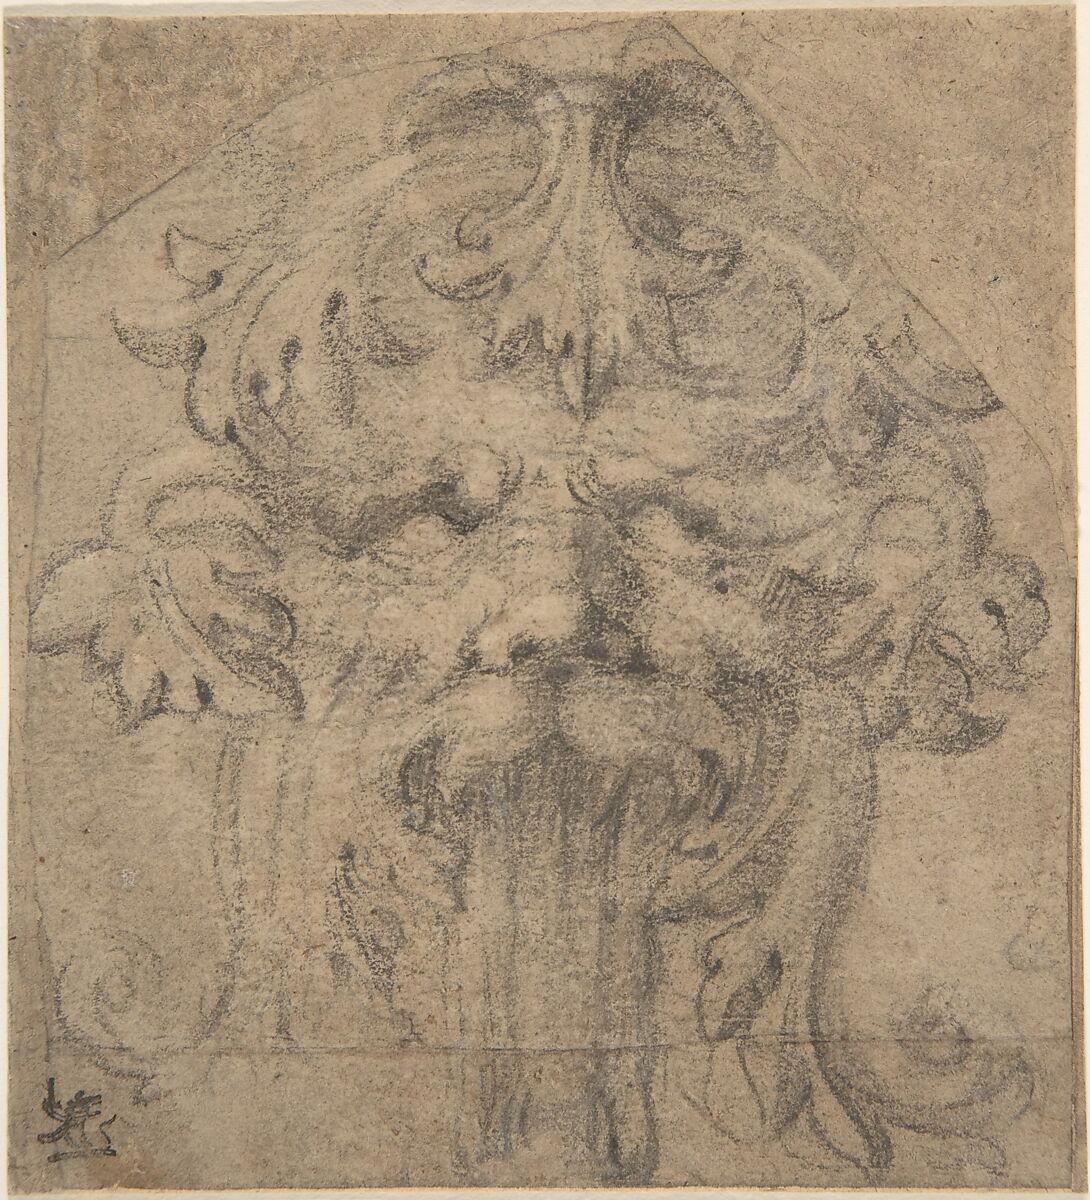 Foliate Grotesque Head, Anonymous, Italian, 16th to 17th century, Black chalk, over graphite or black chalk 